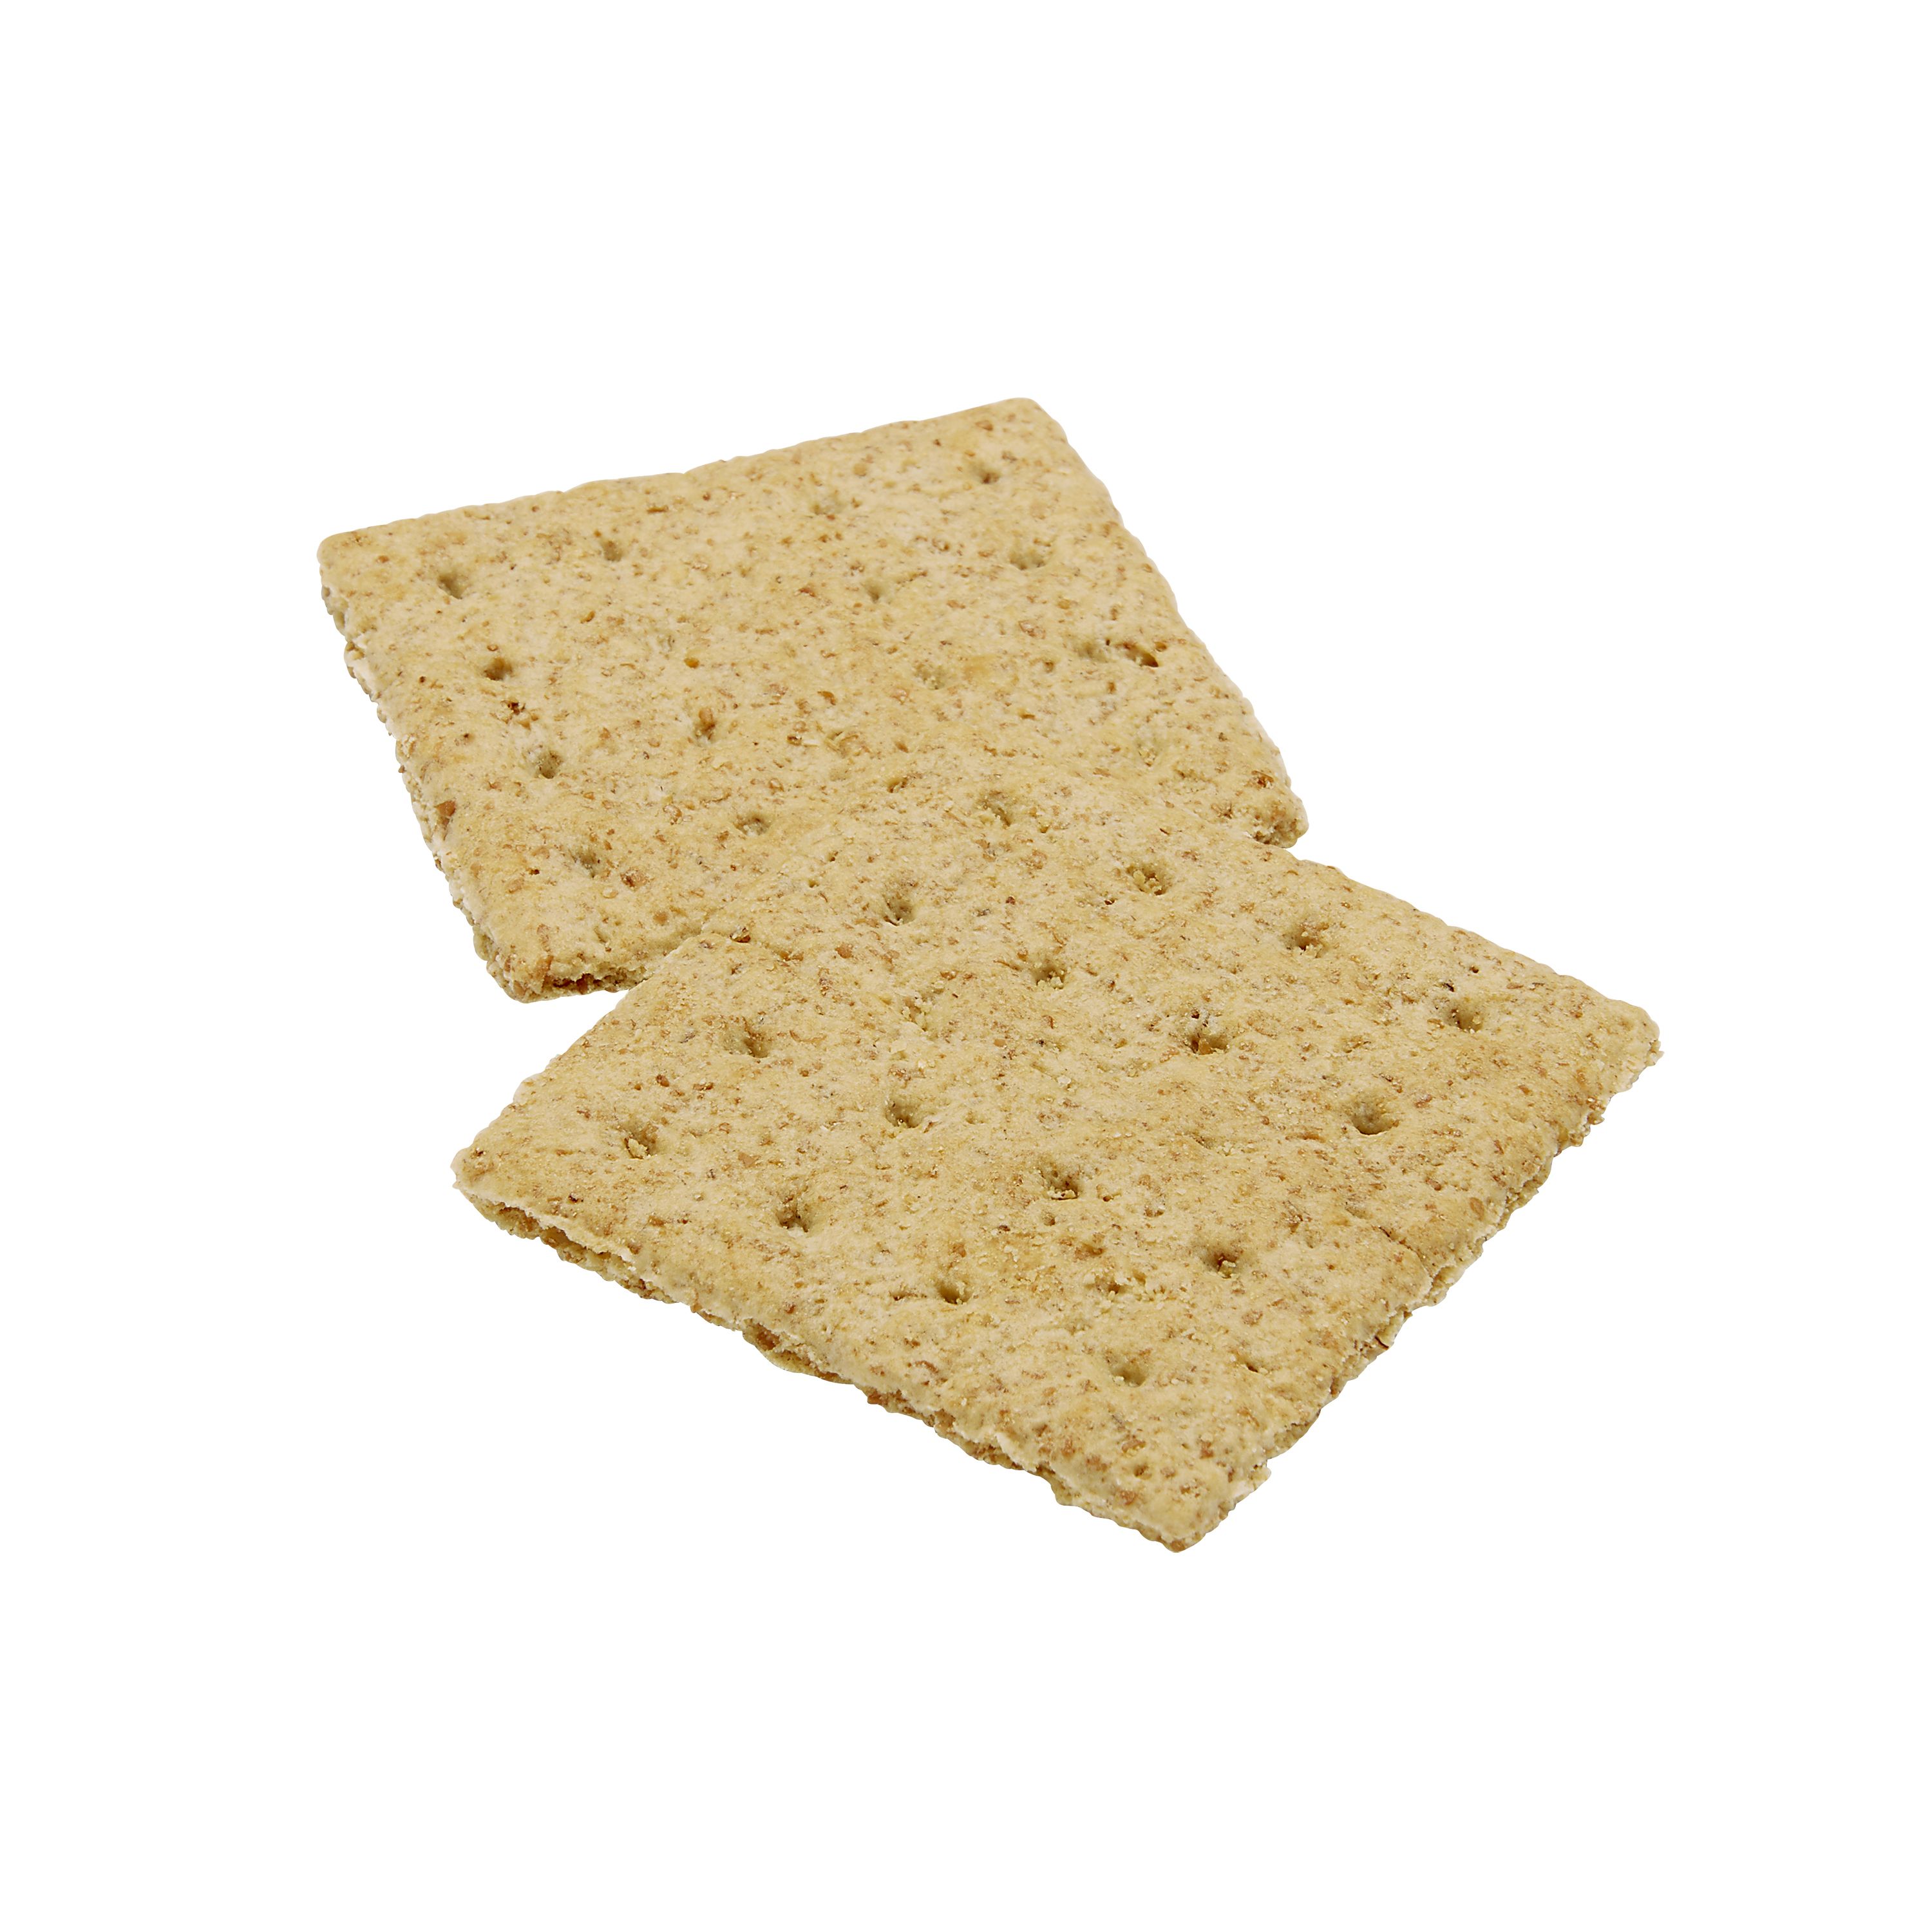 Kellogg's Grahams Crackers, Original, Easy Snacks, 15oz Box